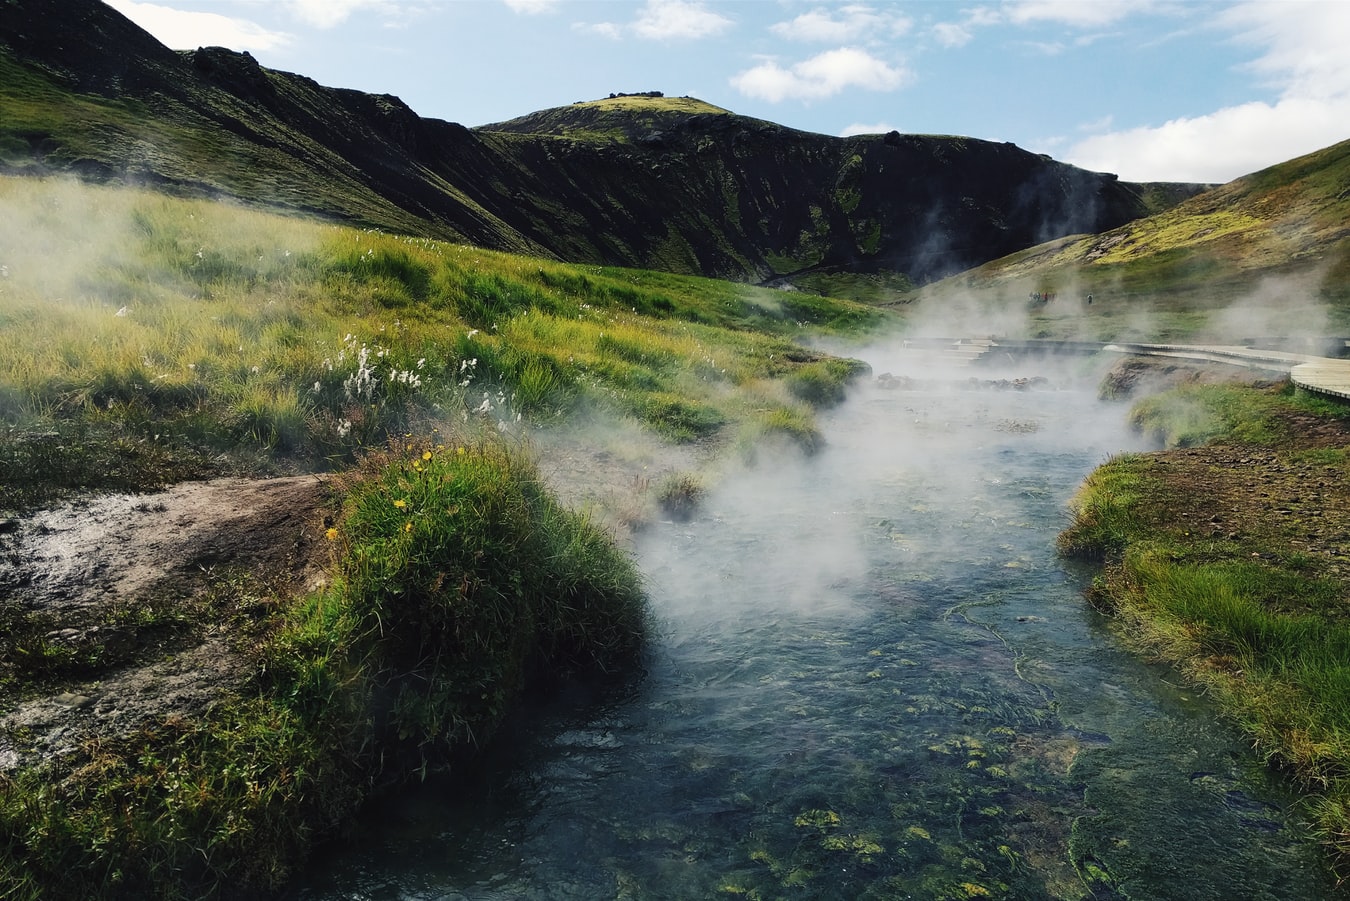 Reykjadalur means Steaming Valley